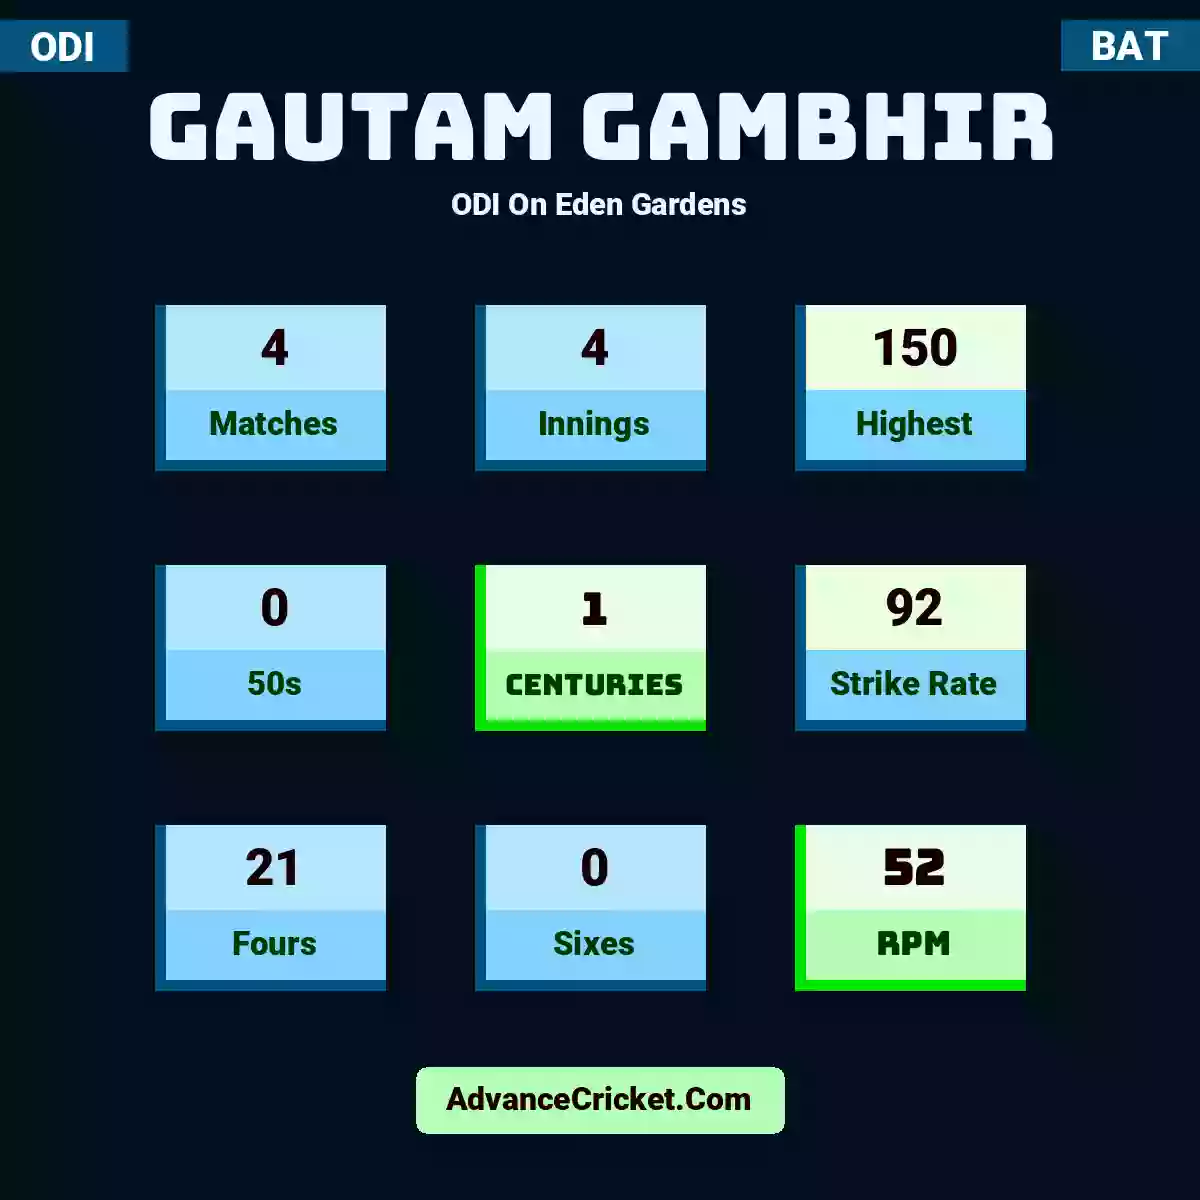 Gautam Gambhir ODI  On Eden Gardens, Gautam Gambhir played 4 matches, scored 150 runs as highest, 0 half-centuries, and 1 centuries, with a strike rate of 92. G.Gambhir hit 21 fours and 0 sixes, with an RPM of 52.